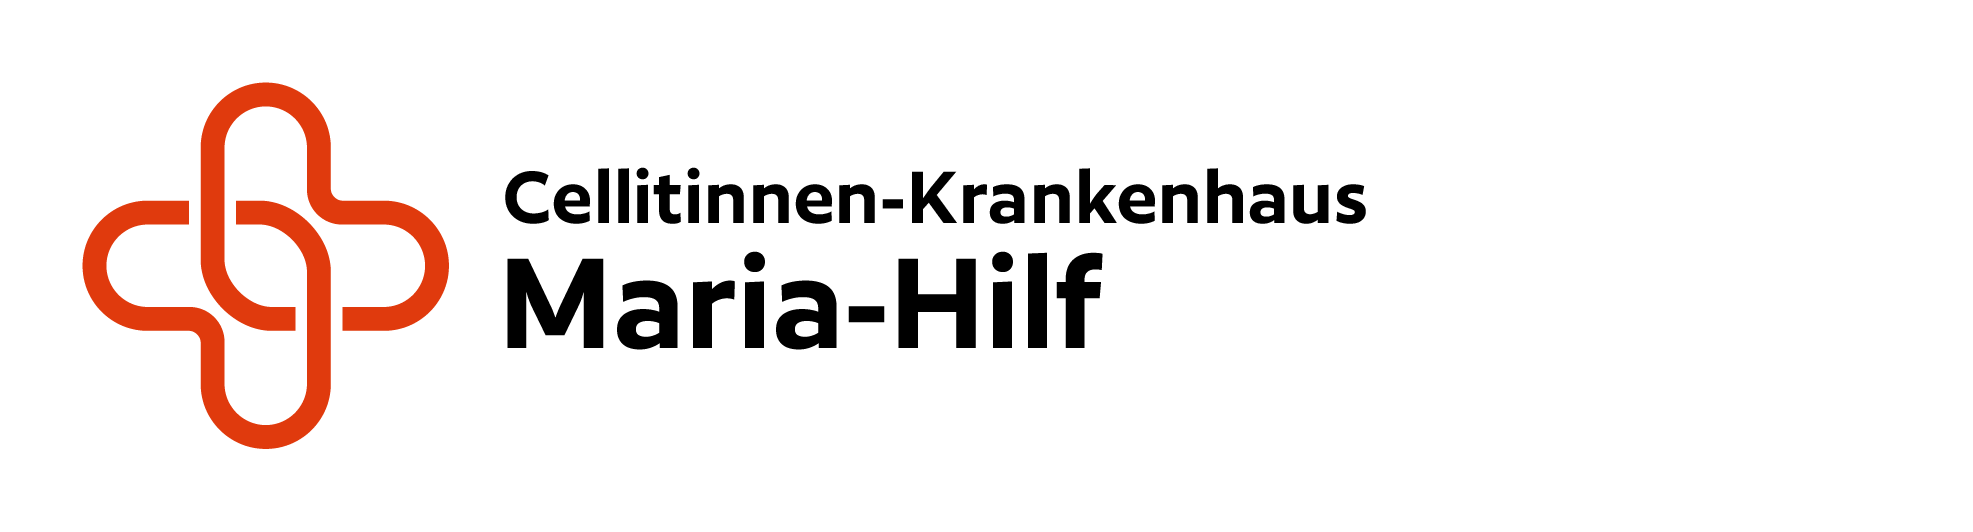 Footer logo image